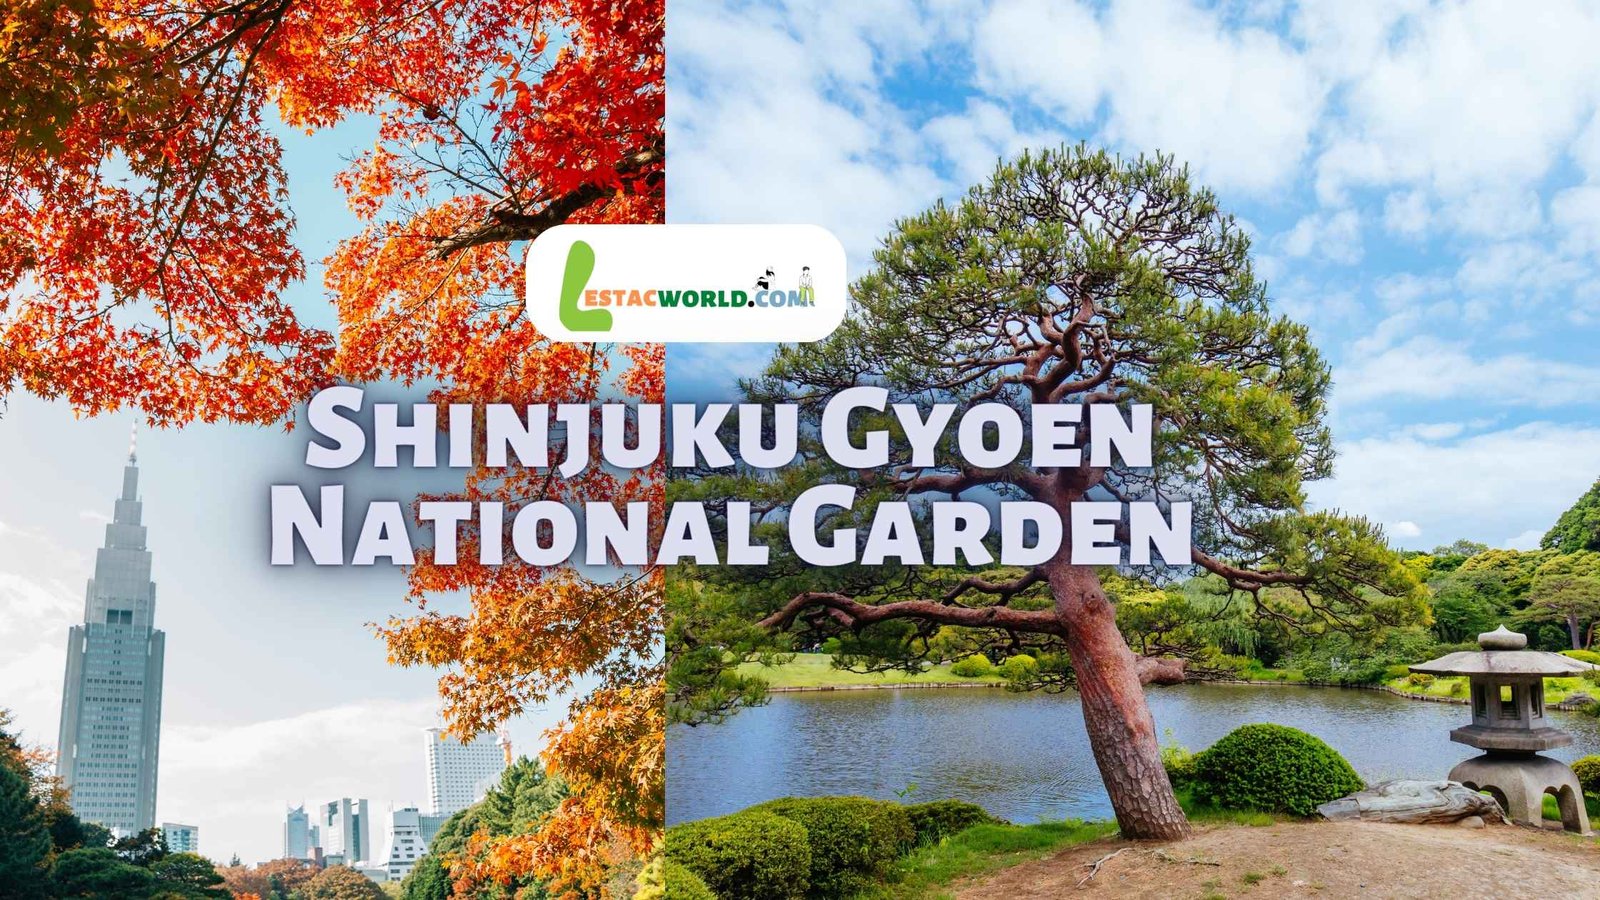 About Shinjuku Gyoen National Garden